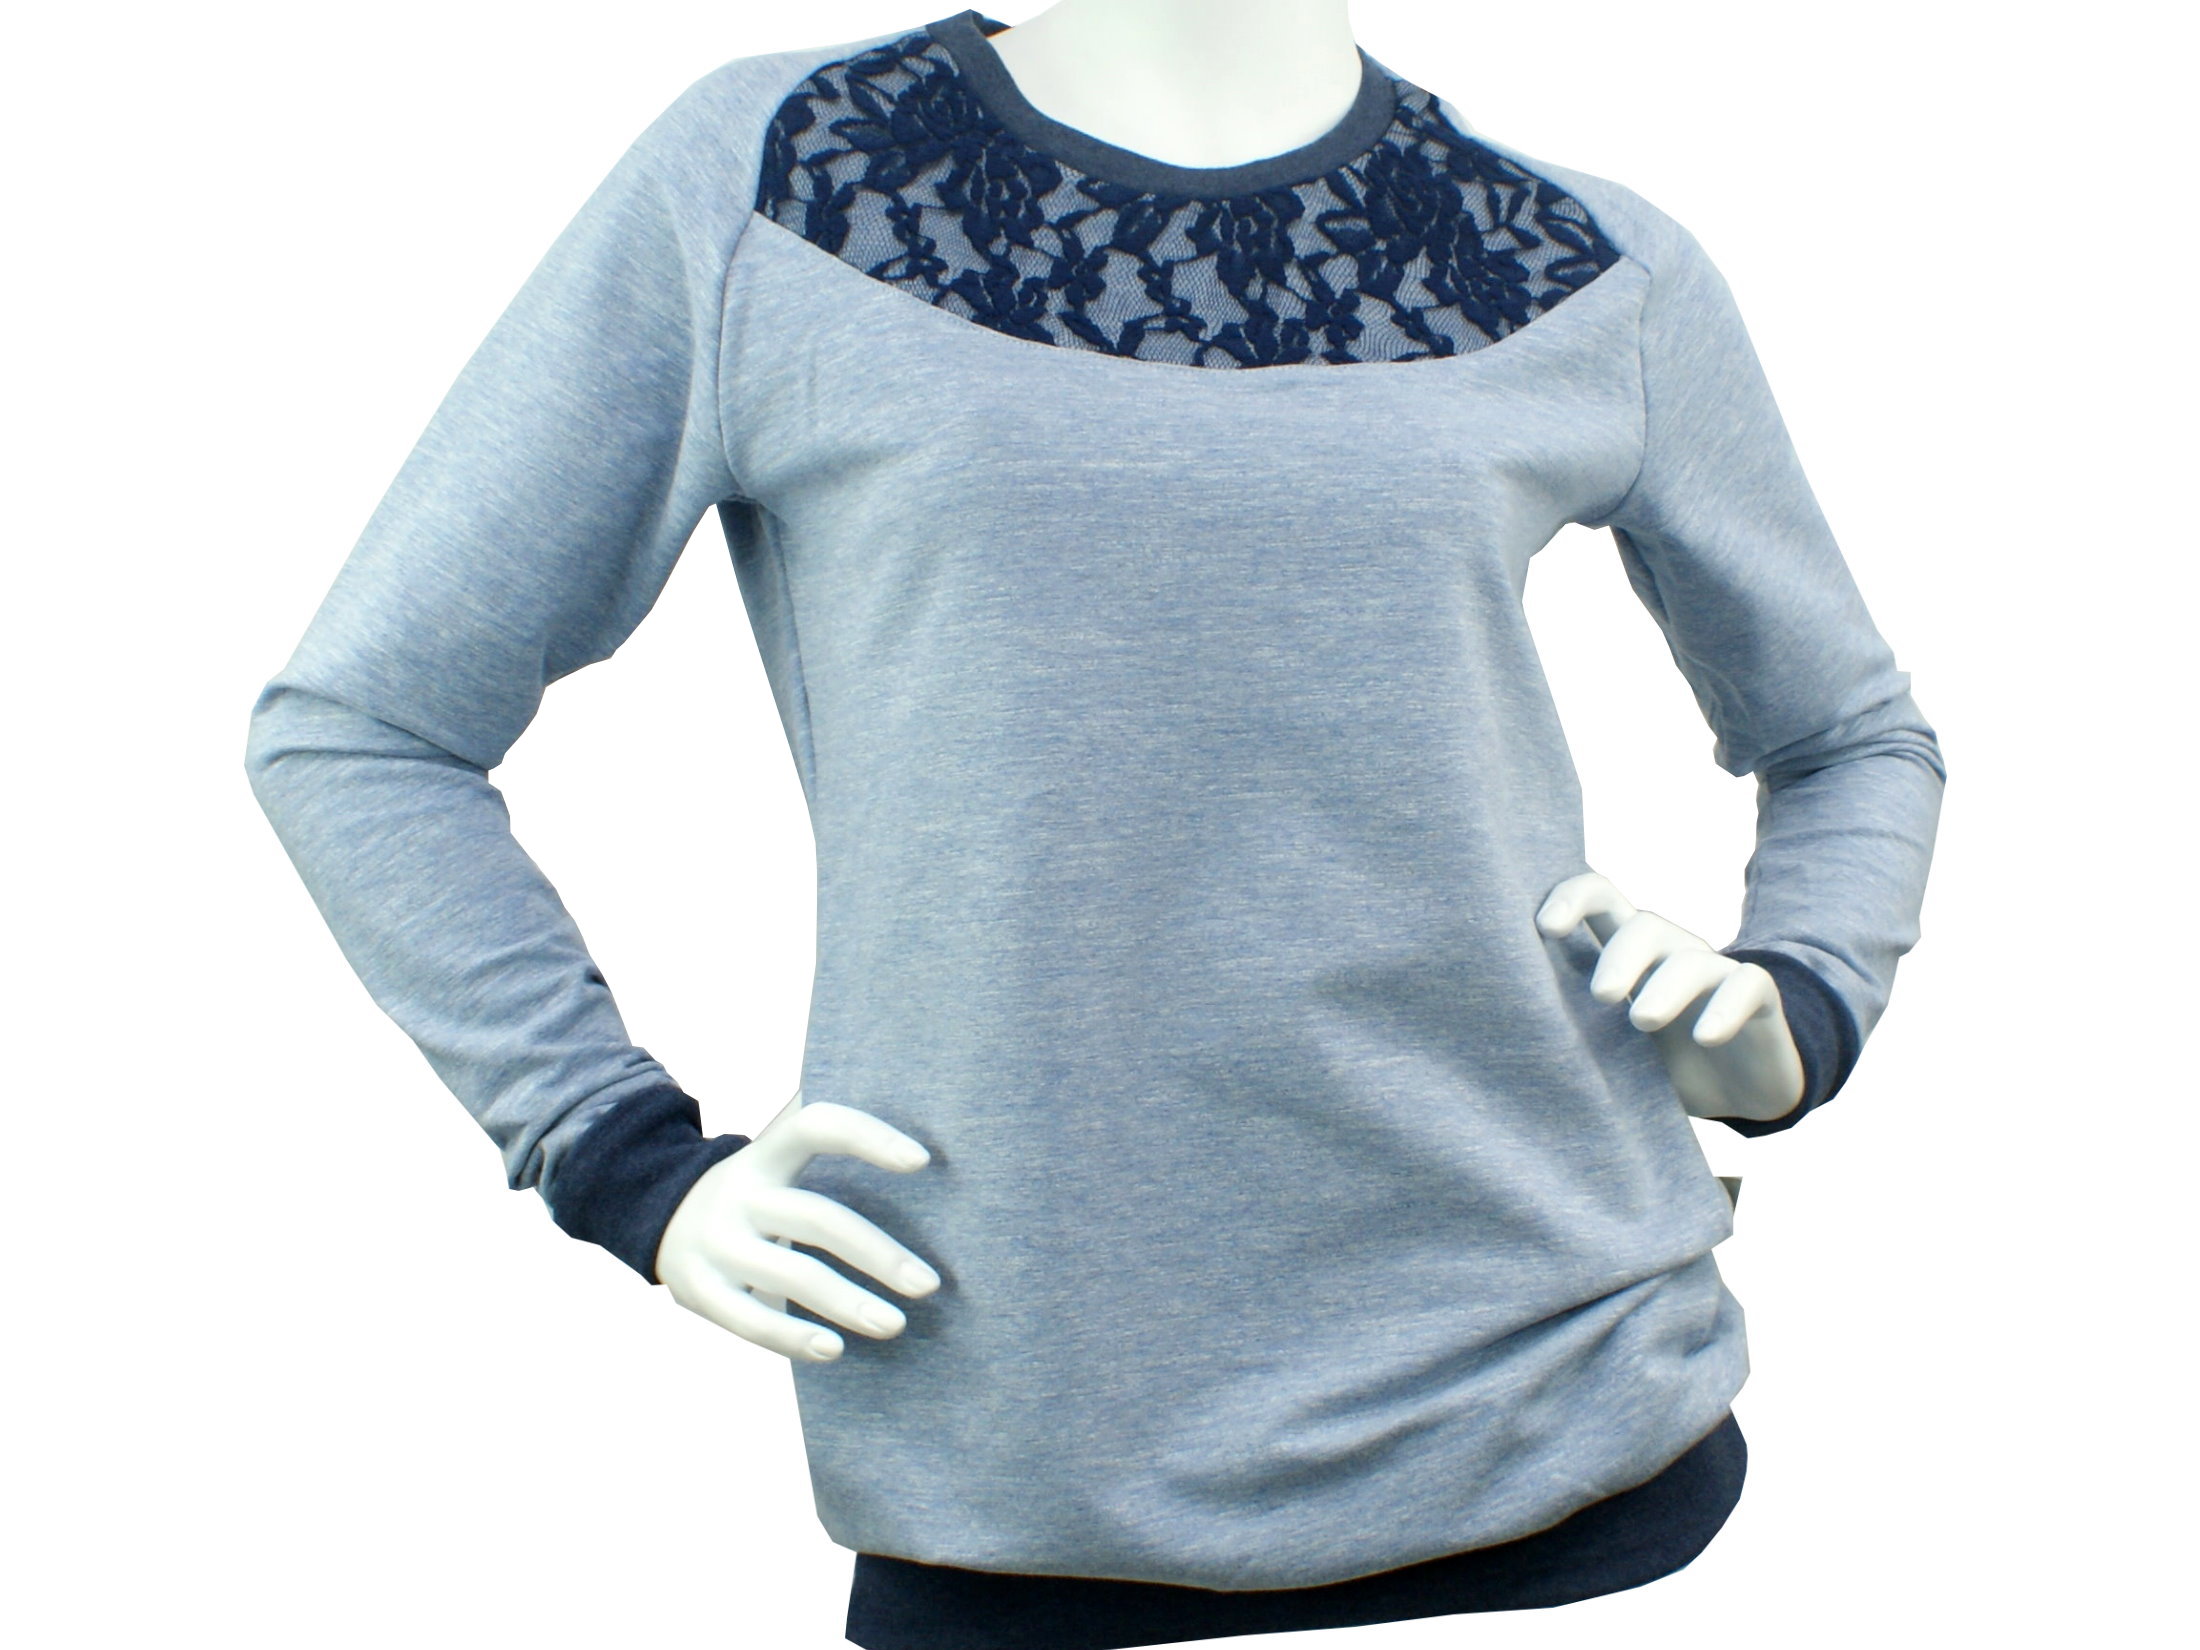 Damen Sweatshirt Pullover "Lace" hellblau-meliert mit Spitze